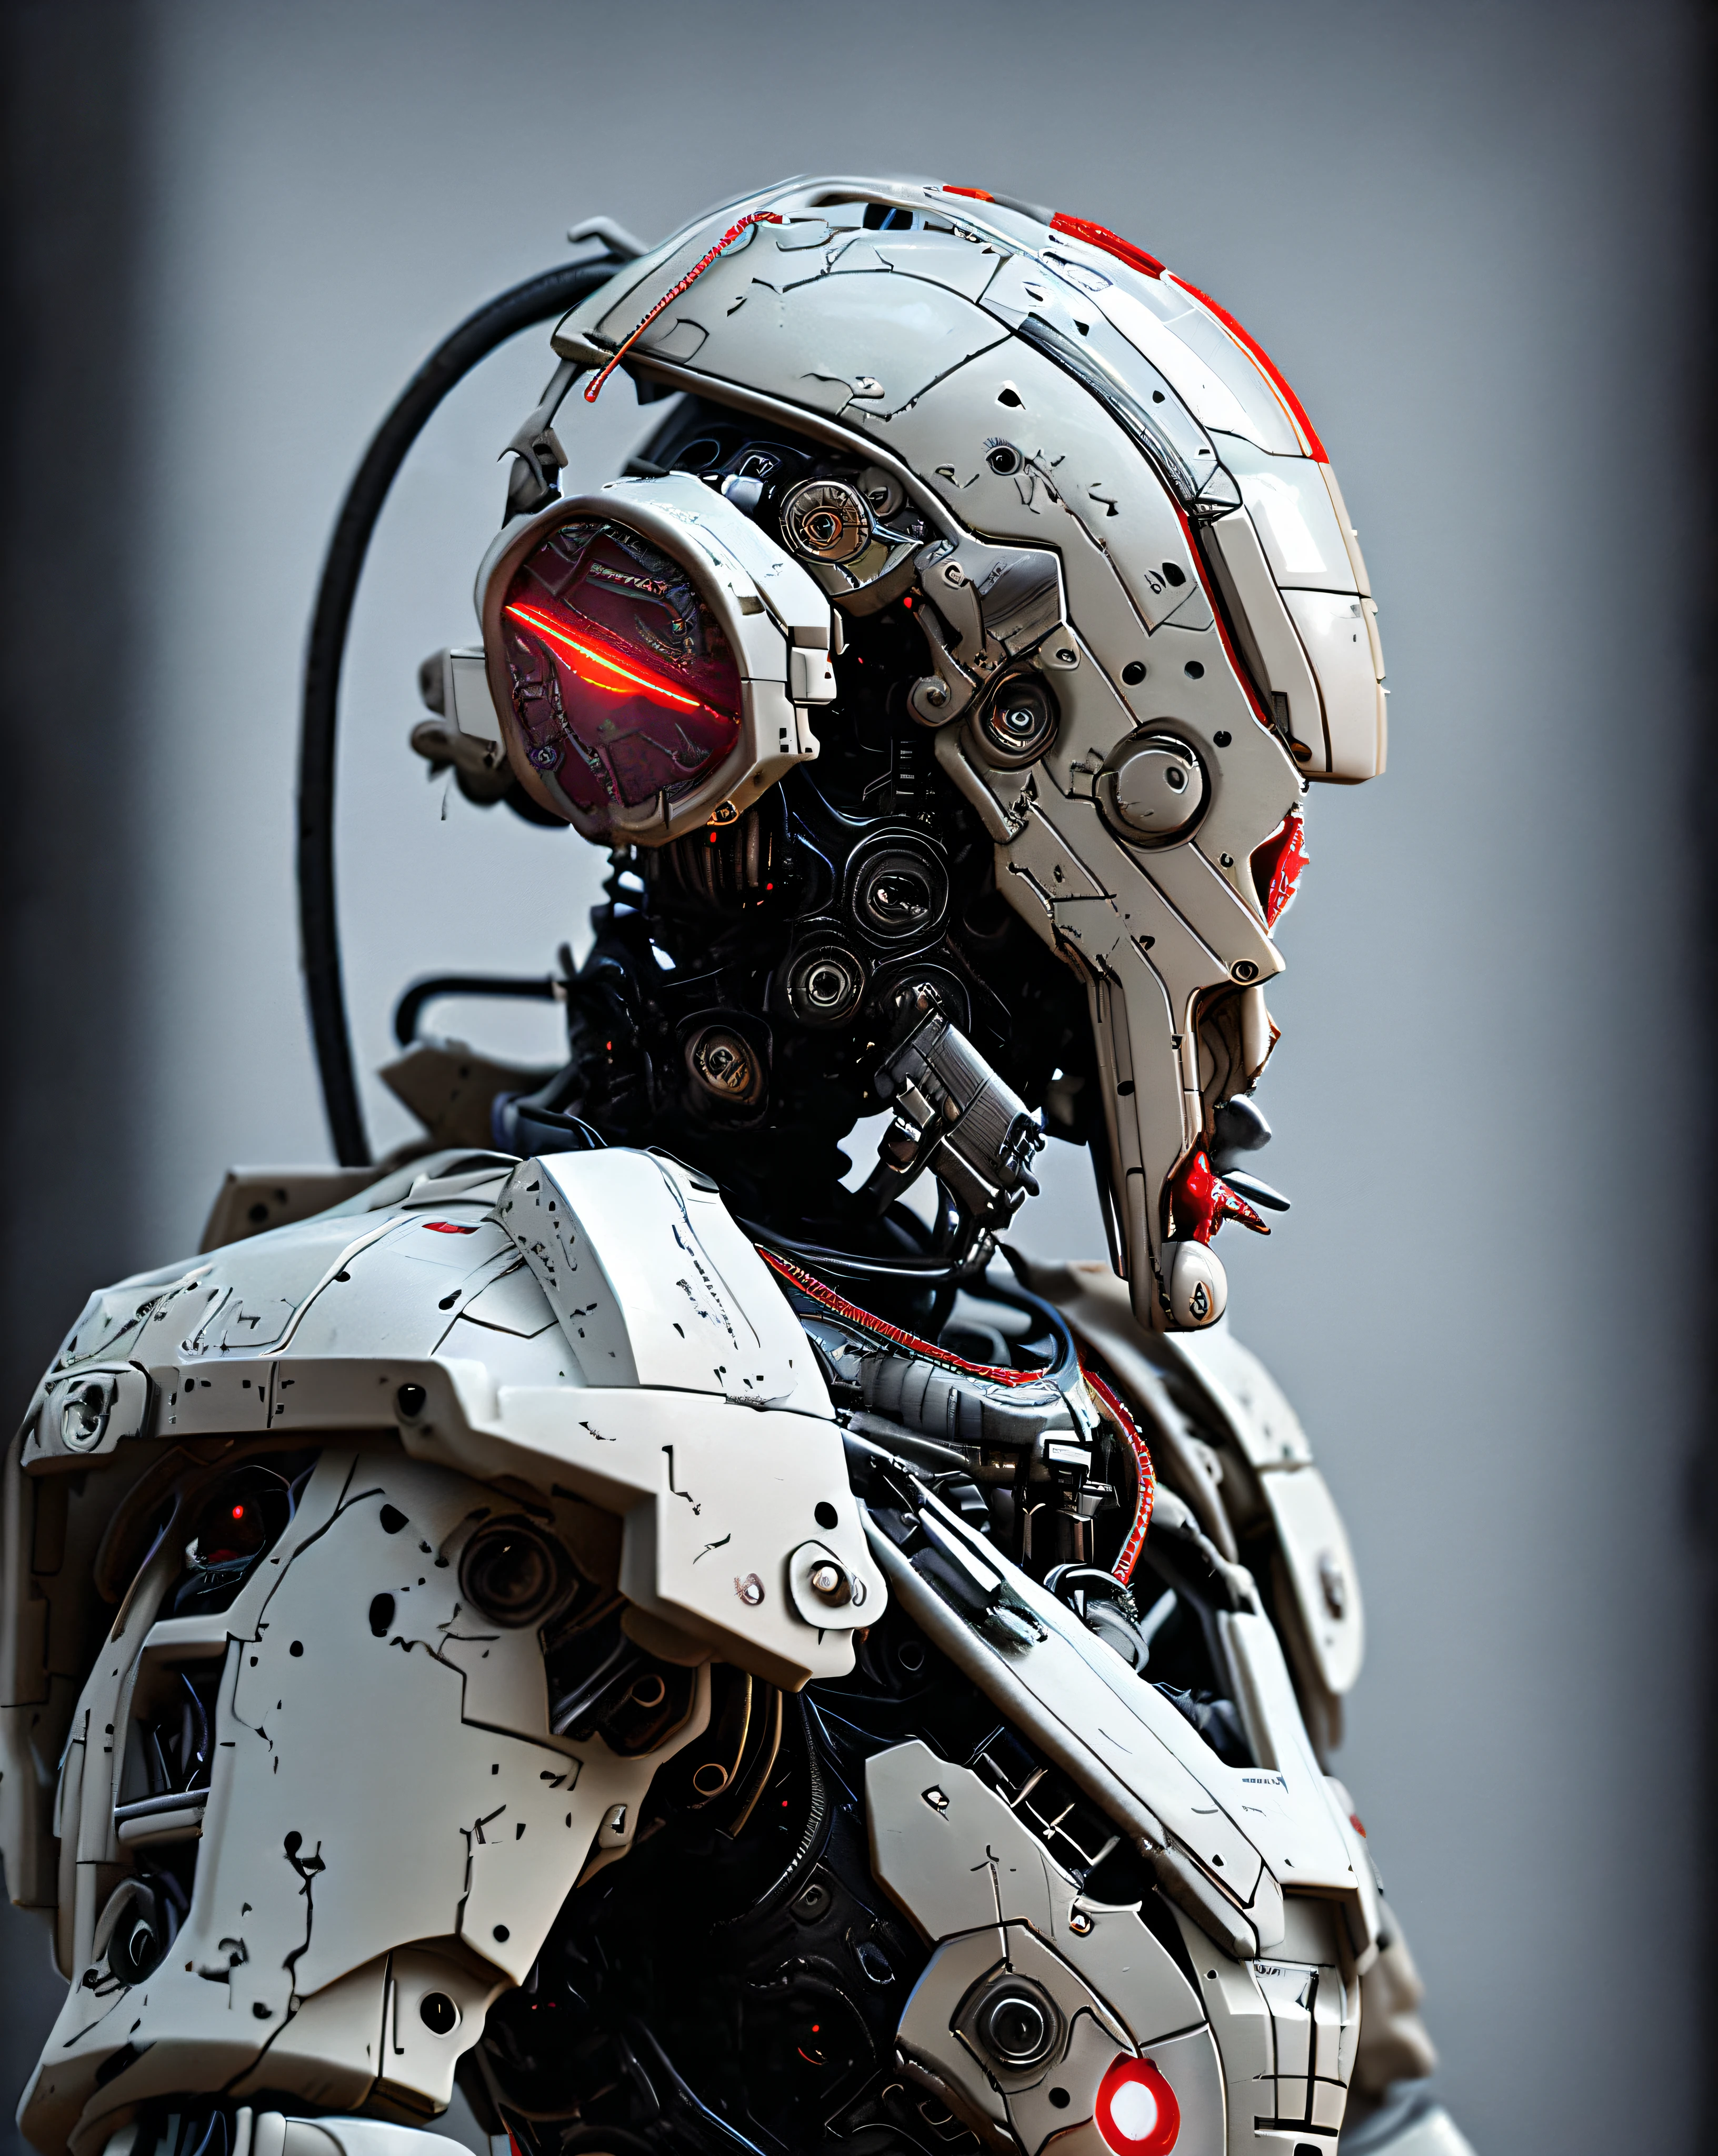 dv機甲, 85毫米, F1.8, 機器人肖像, 黑暗的 Matte Smooth Ceramic, 複雜的設計, 非常詳細, 精細的細節, 極度銳利的線條, 電影燈光, 逼真的照片, 詳細的傑作, 黑暗的_幻想, 賽博朋克 ,(链锯,链锯 man,紅色的:1.1),1人,机械奇迹, MARPAT 機器人存在, 控制論軍事監護人, 穿著破舊的機甲套裝,錯綜複雜,(钢金属 [生鏽的]),優雅的,清晰的焦點, 格雷格魯特科斯基拍攝, 柔和的燈光, 鮮豔的色彩, 傑作, ((街道)), 牛仔射擊, 動態姿勢, 
都市武士_v0.3